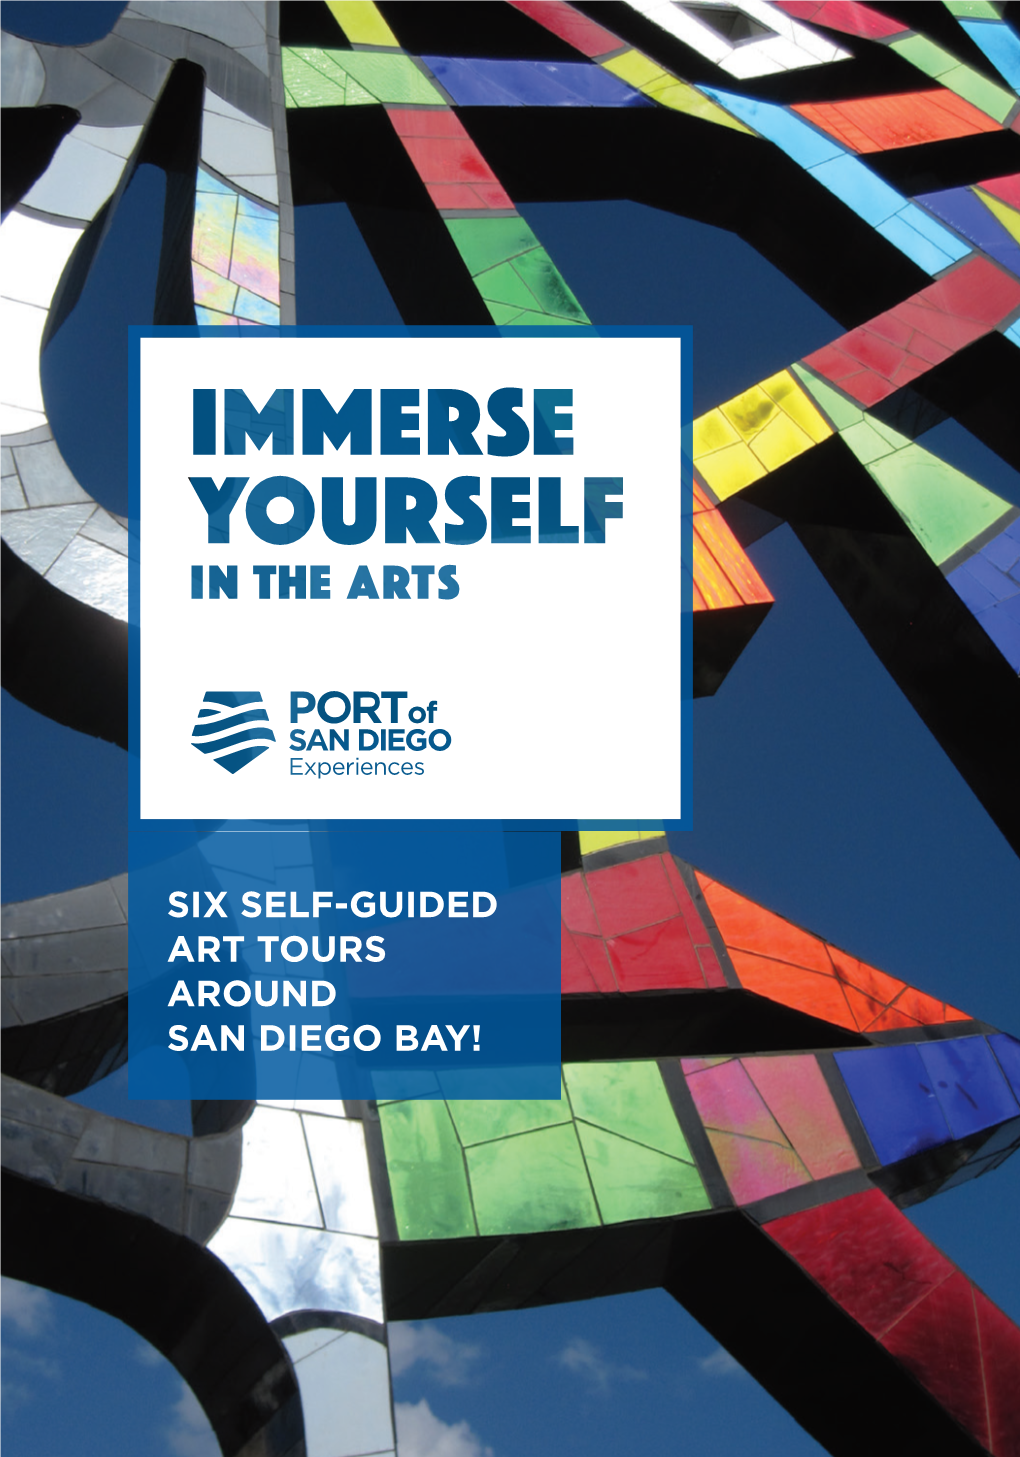 Six Self-Guided Art Tours Around San Diego Bay!